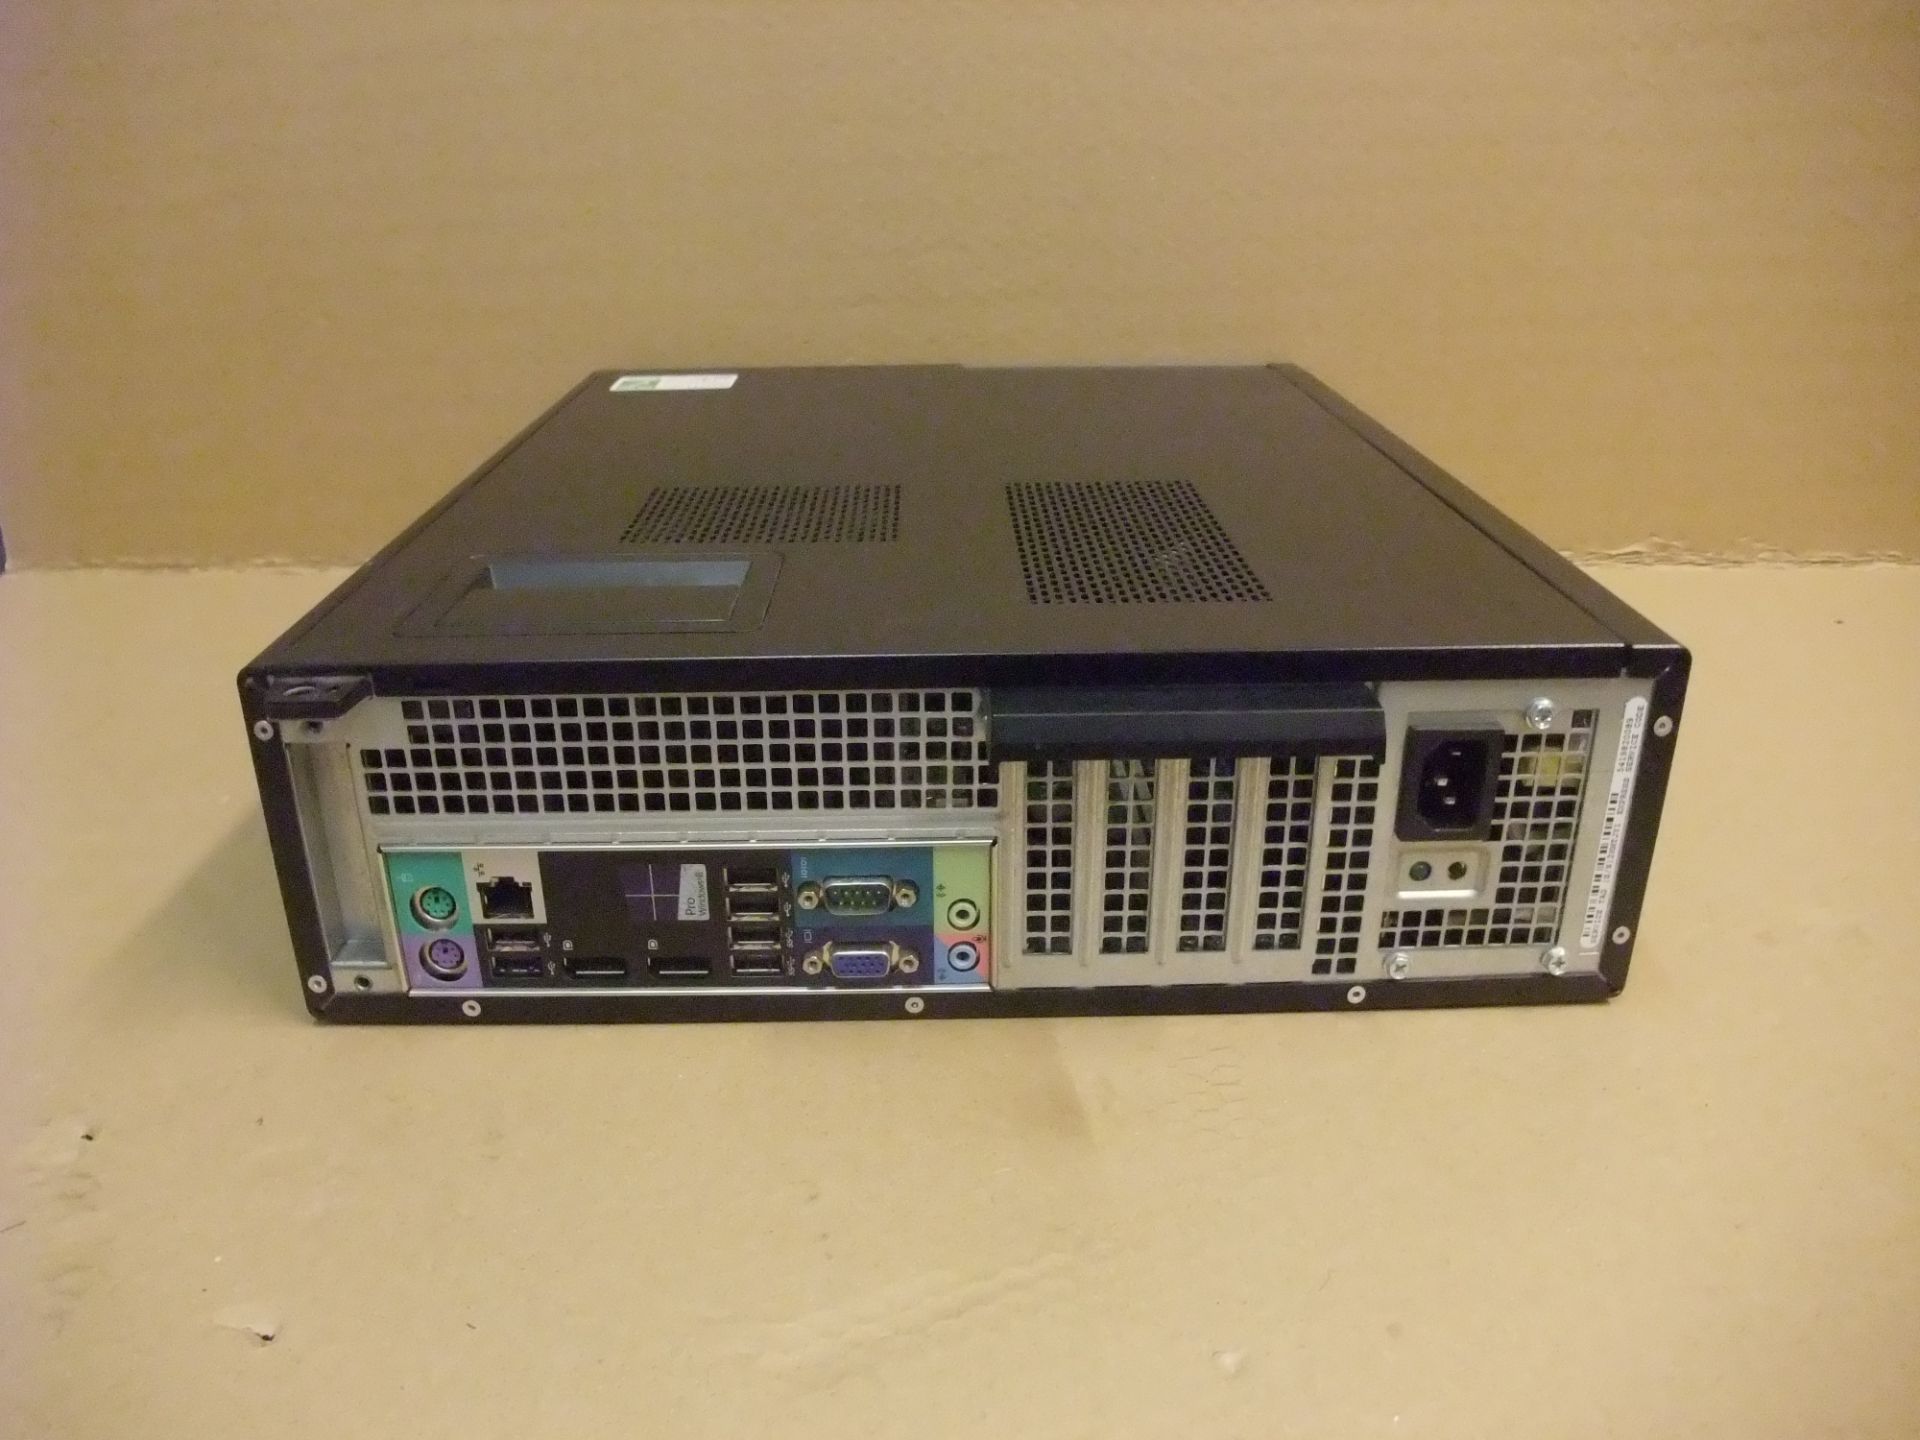 Dell OptiPlex 7010 Personal Computer - i5, 4Gb RAM, 120Gb SSD, Windows 10 Pro, with Dell - Image 3 of 3